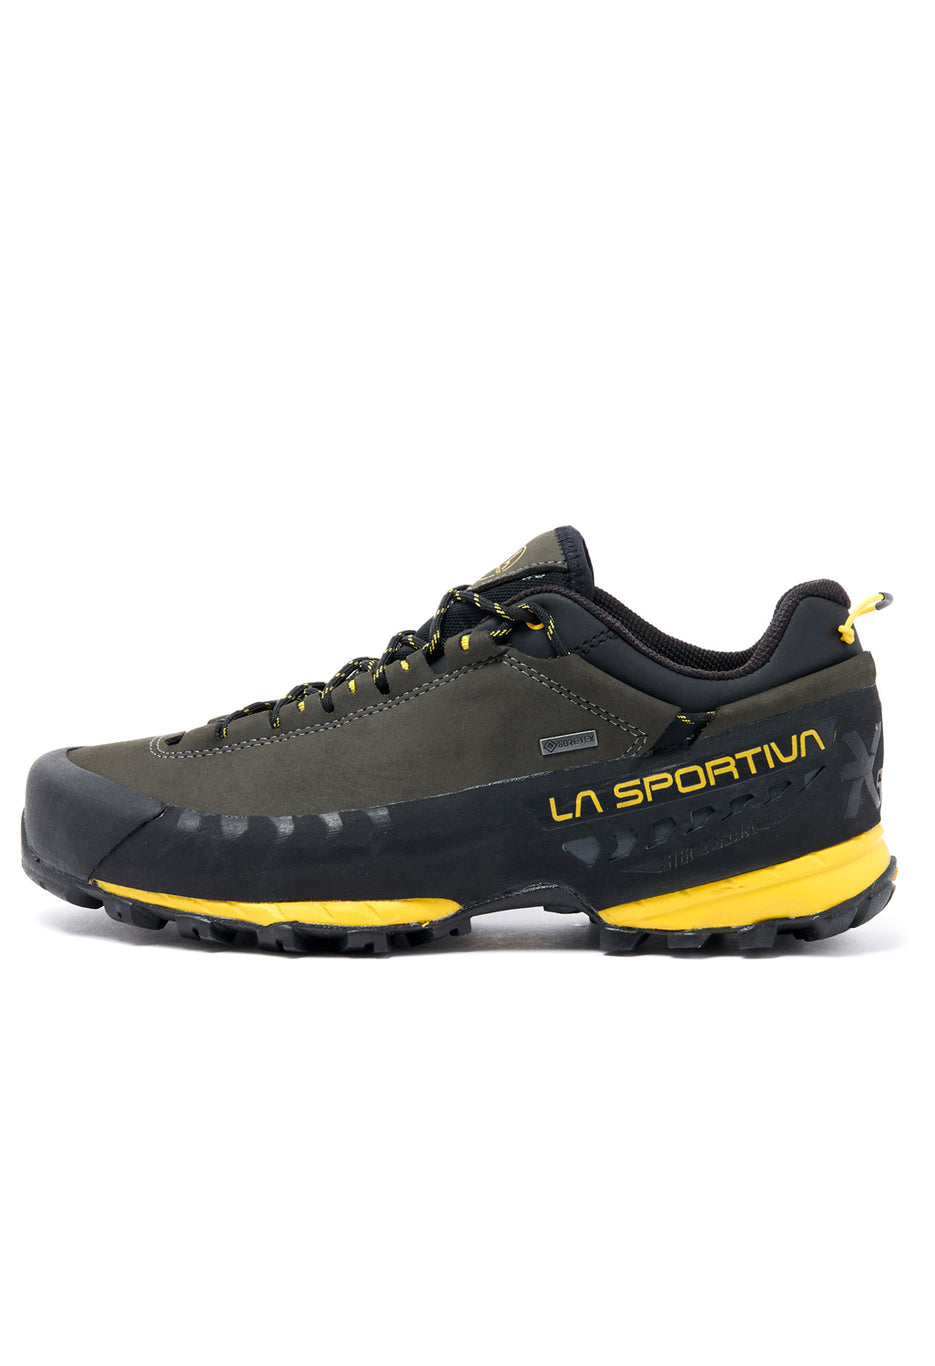 La Sportiva TX5 Low GORE-TEX Men's Boots - Carbon / Yellow